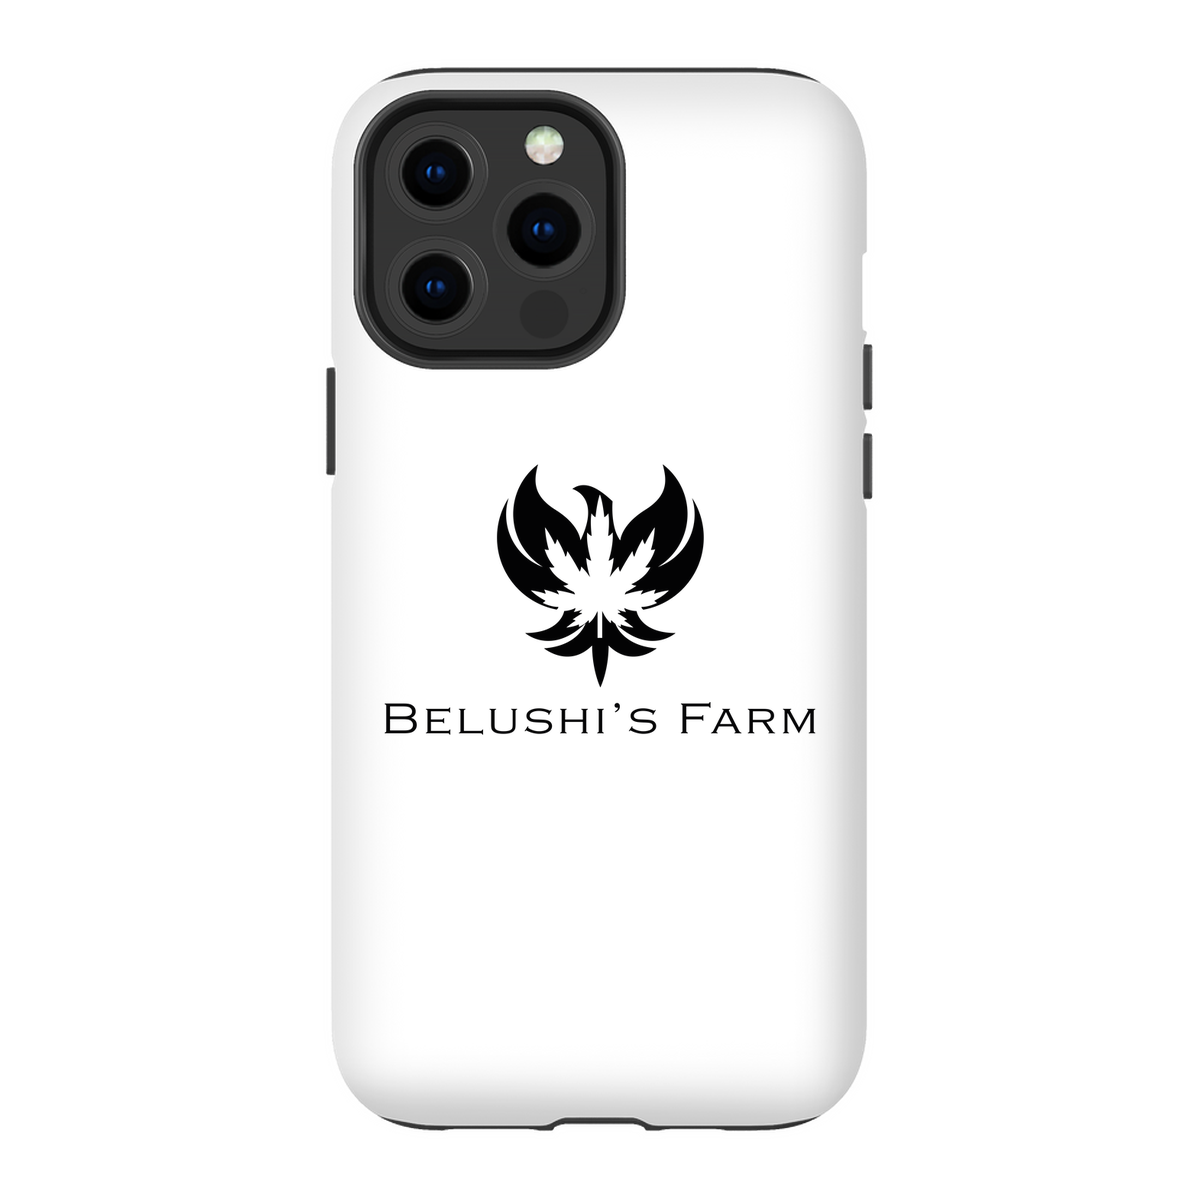 Belushi's Farm Phoenix Phone Cases